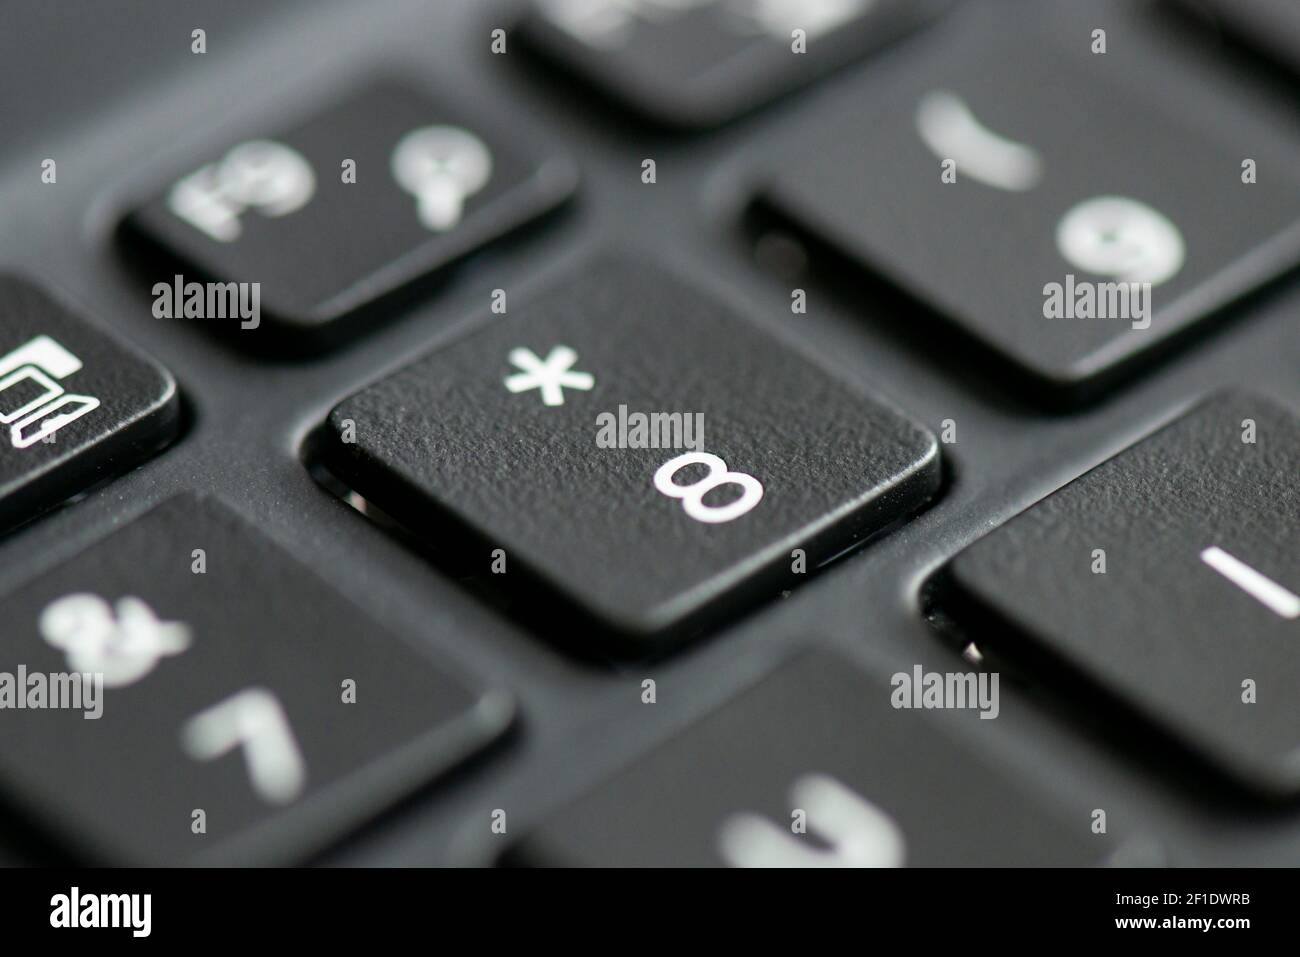 8 and asterisk key on a laptop keyboard Stock Photo - Alamy